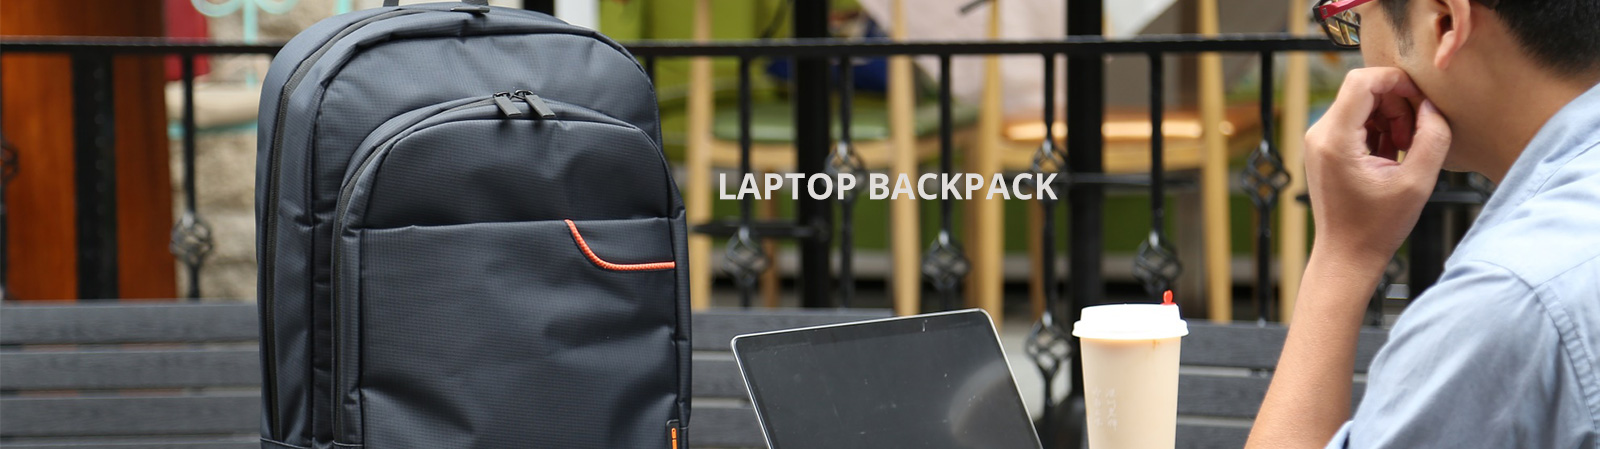 GEPIO-Foucusing on Designing & Manufacturing Laptop Backpack,School Backpack, Laptop Bags, etc